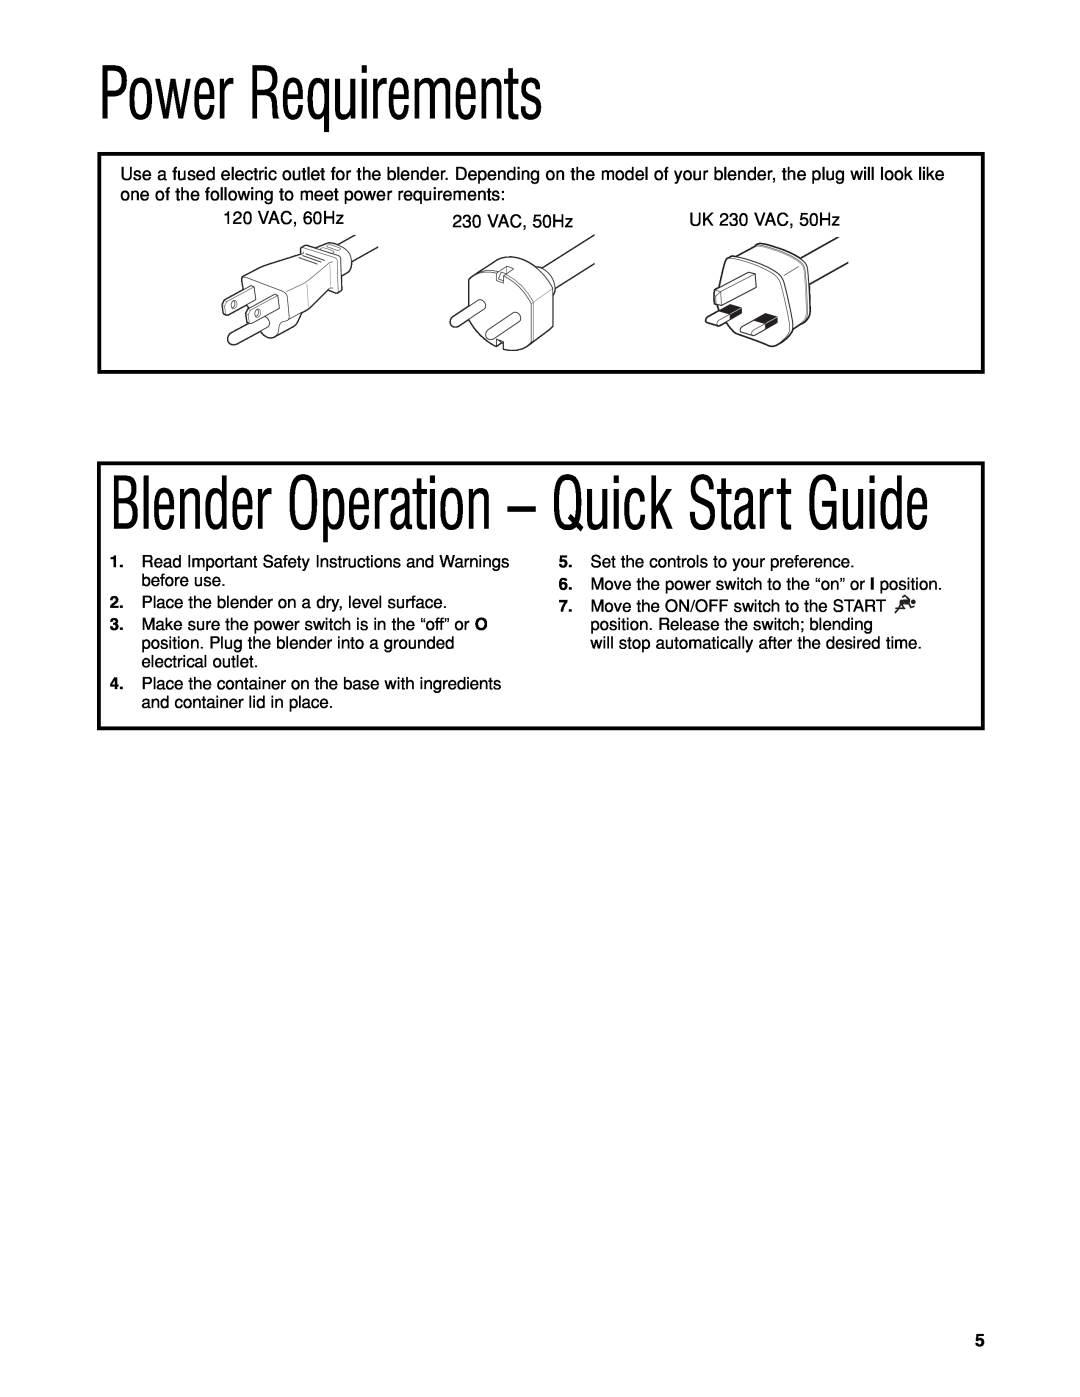 Hamilton Beach HBH450 manuel dutilisation Power Requirements, Blender Operation - Quick Start Guide 